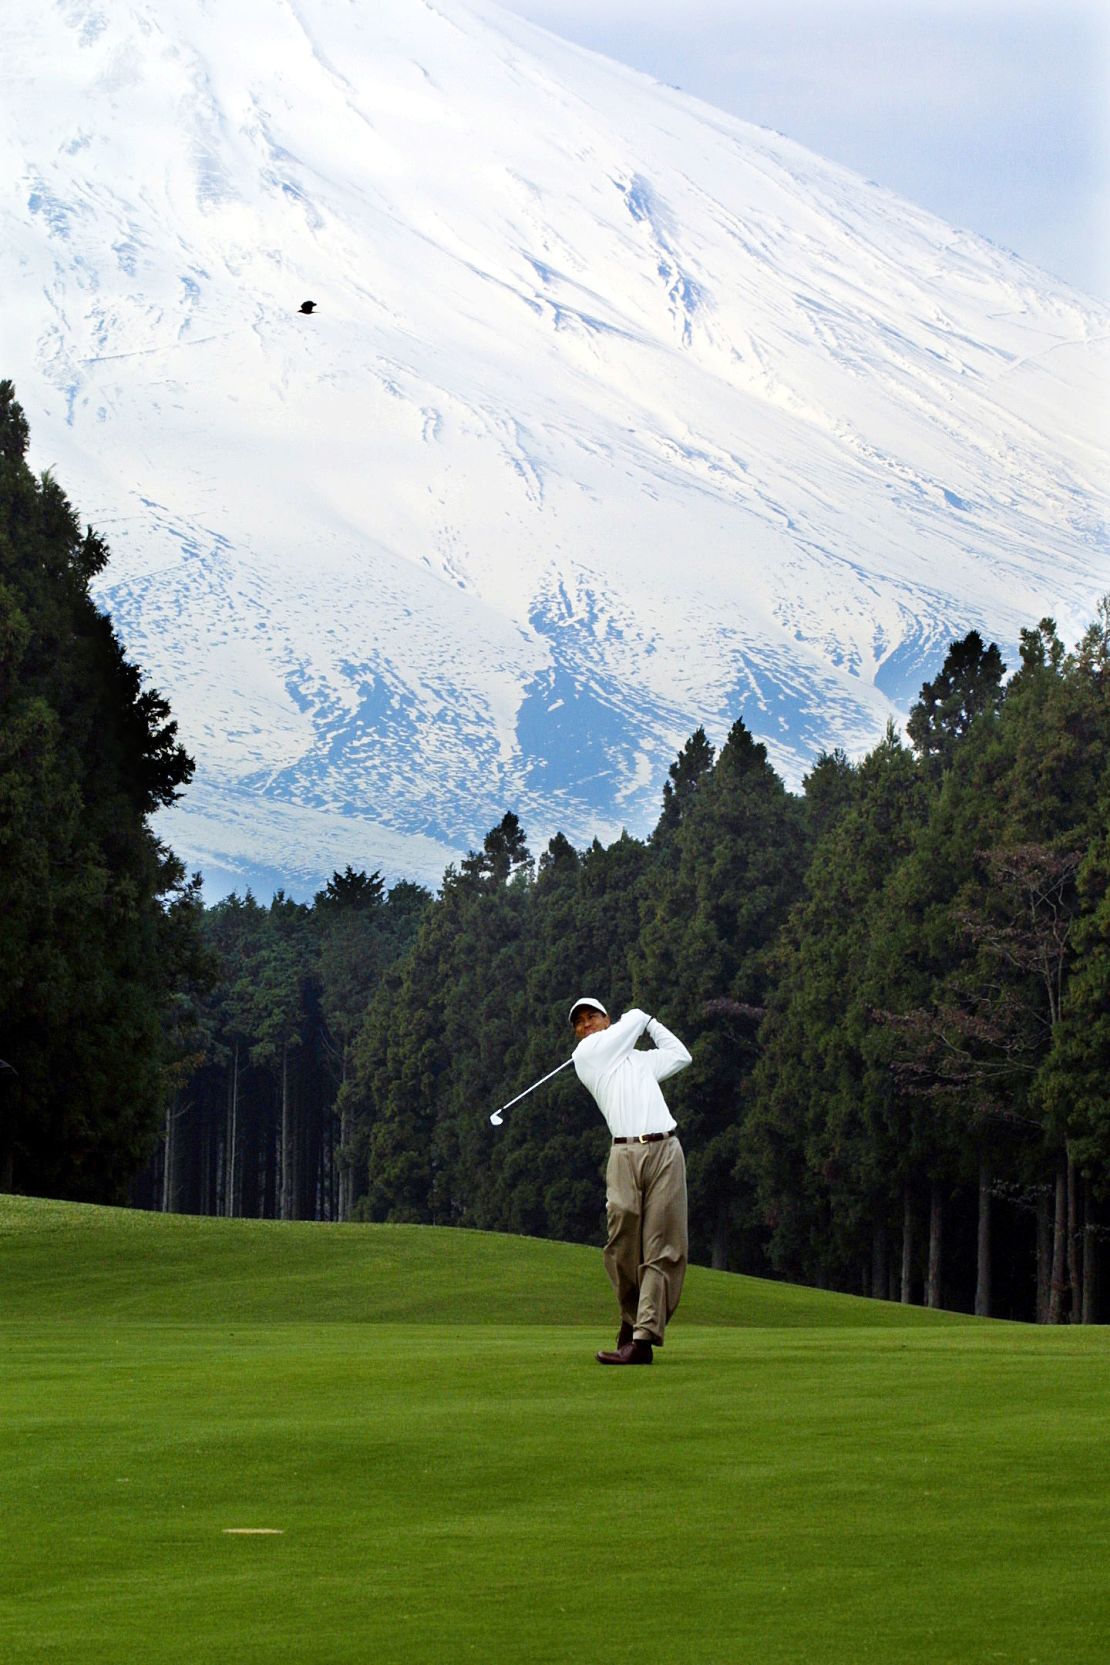 Tiger Woods follows through on a shot at the Gotemba Golf Course near Tokyo, Japan.